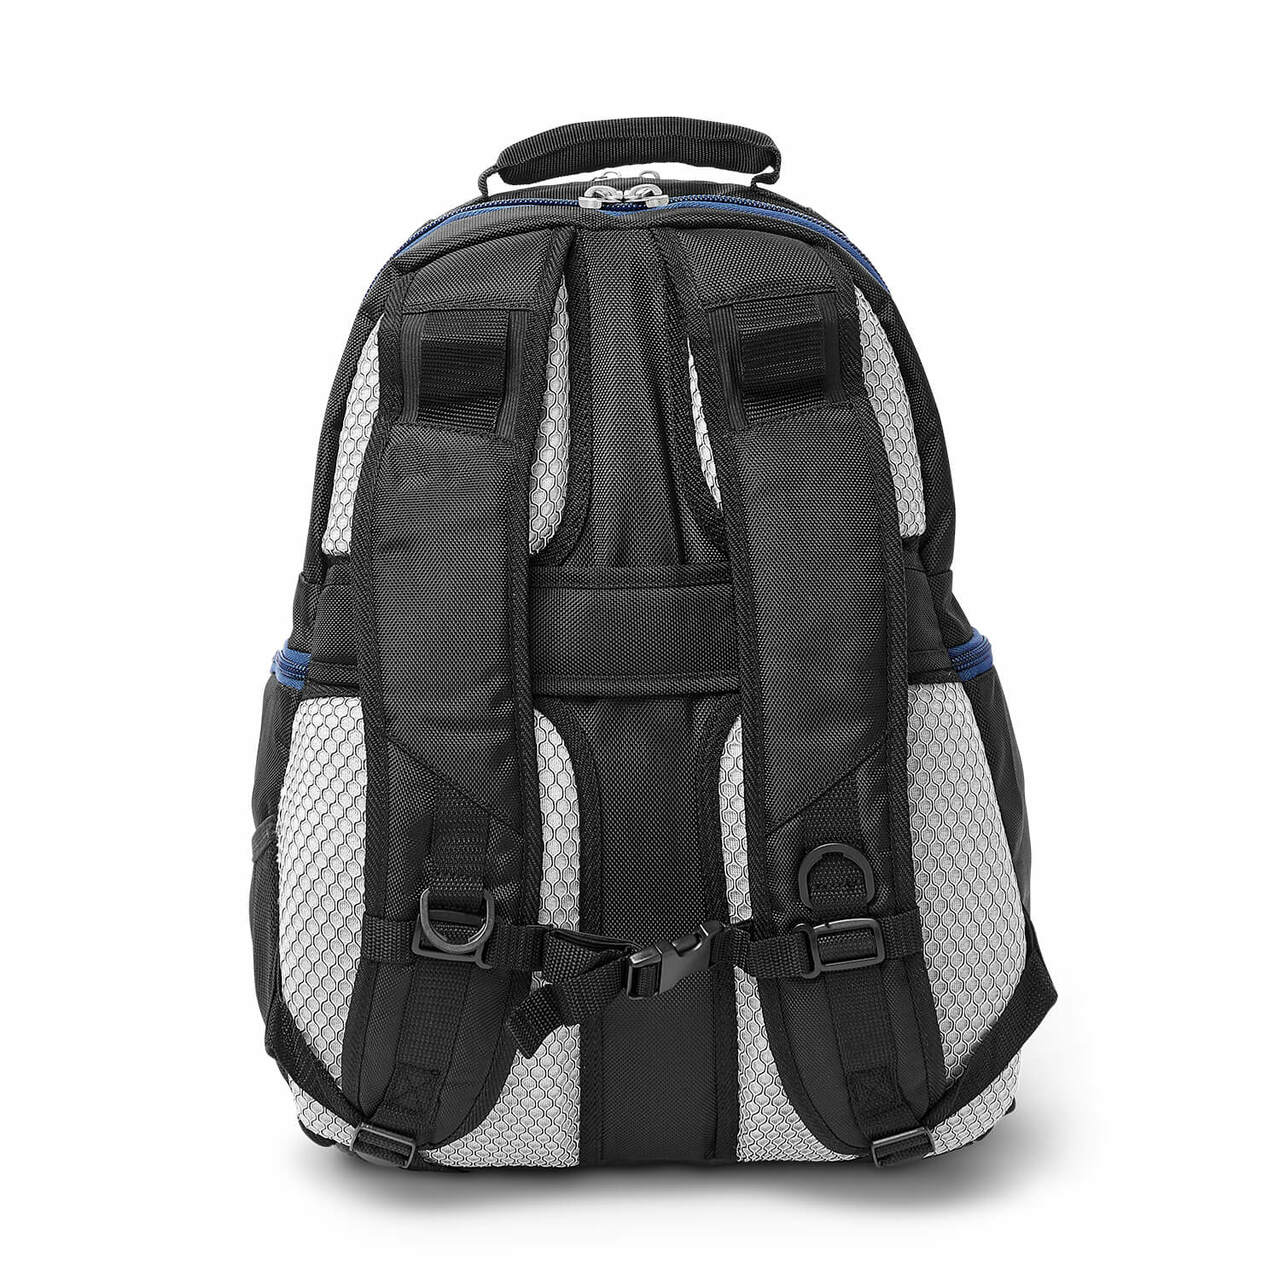 Seattle Kraken Premium Travel Laptop Backpack